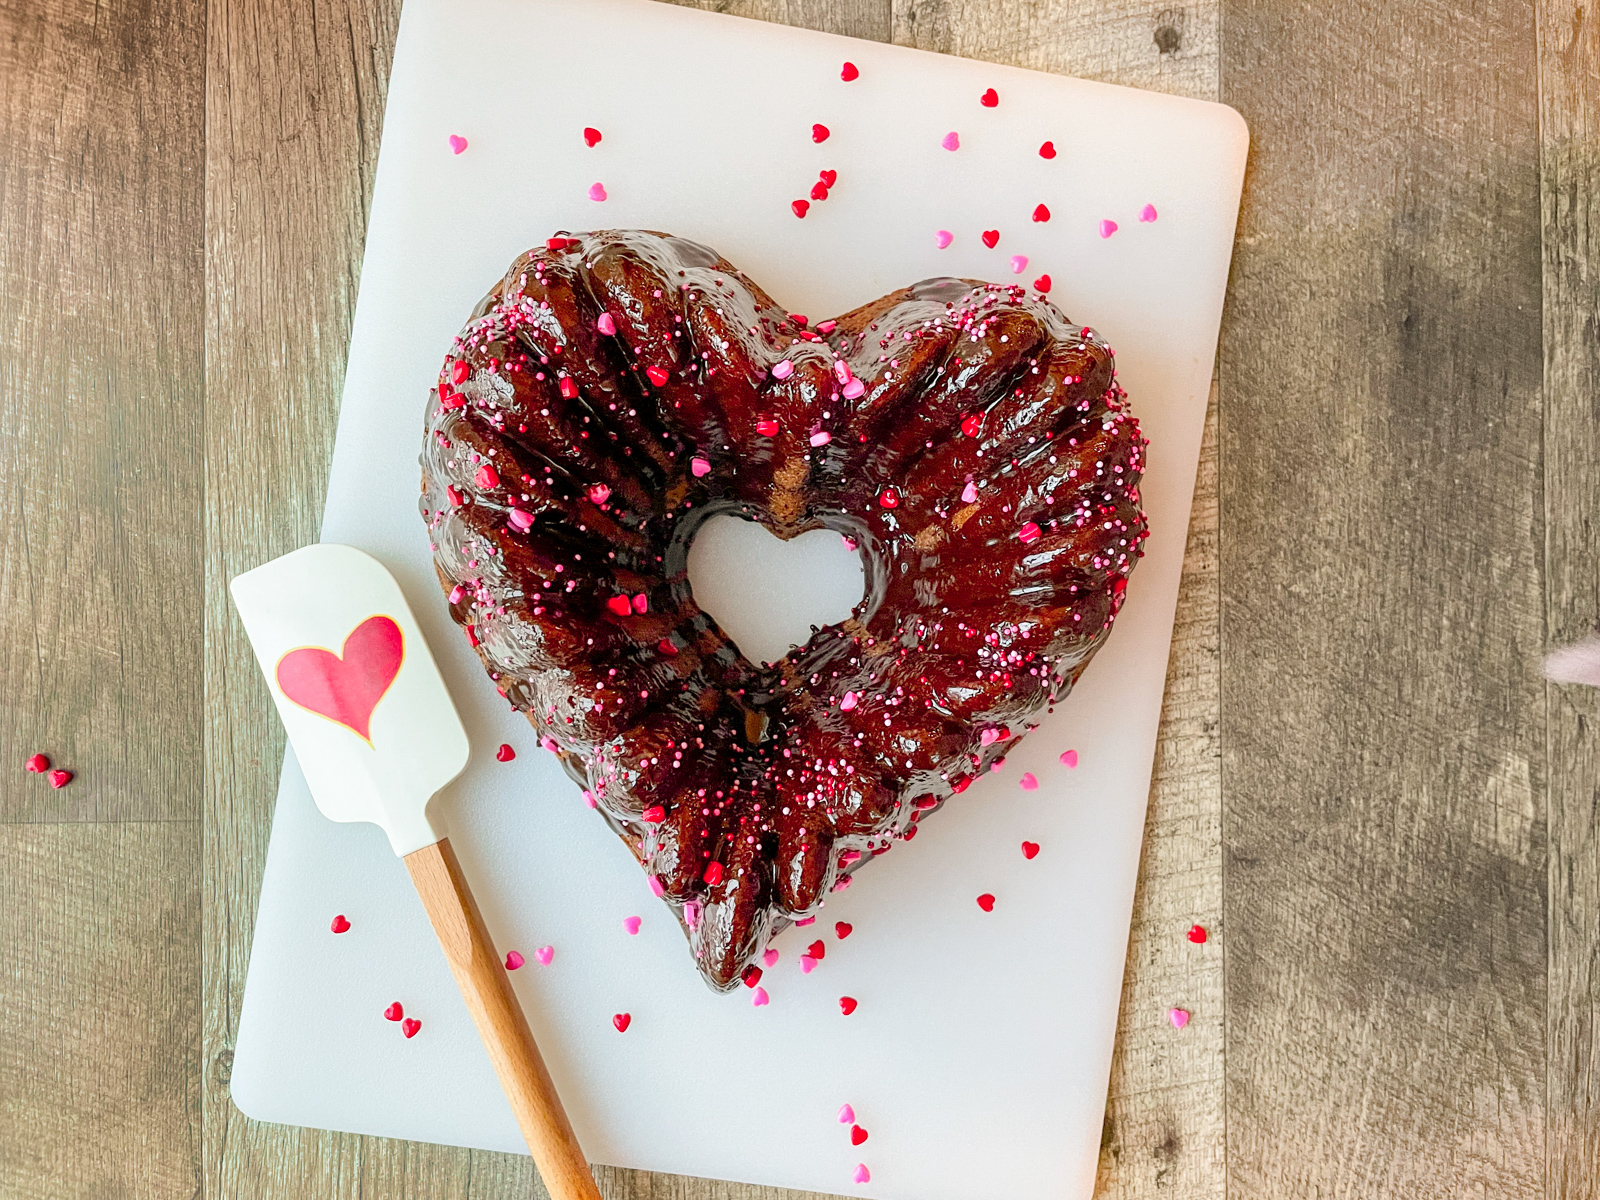 https://everydaylaura.com/wp-content/uploads/2022/01/Triple-Chocolate-Valentine-Bundt-Cake-4-of-7.jpg